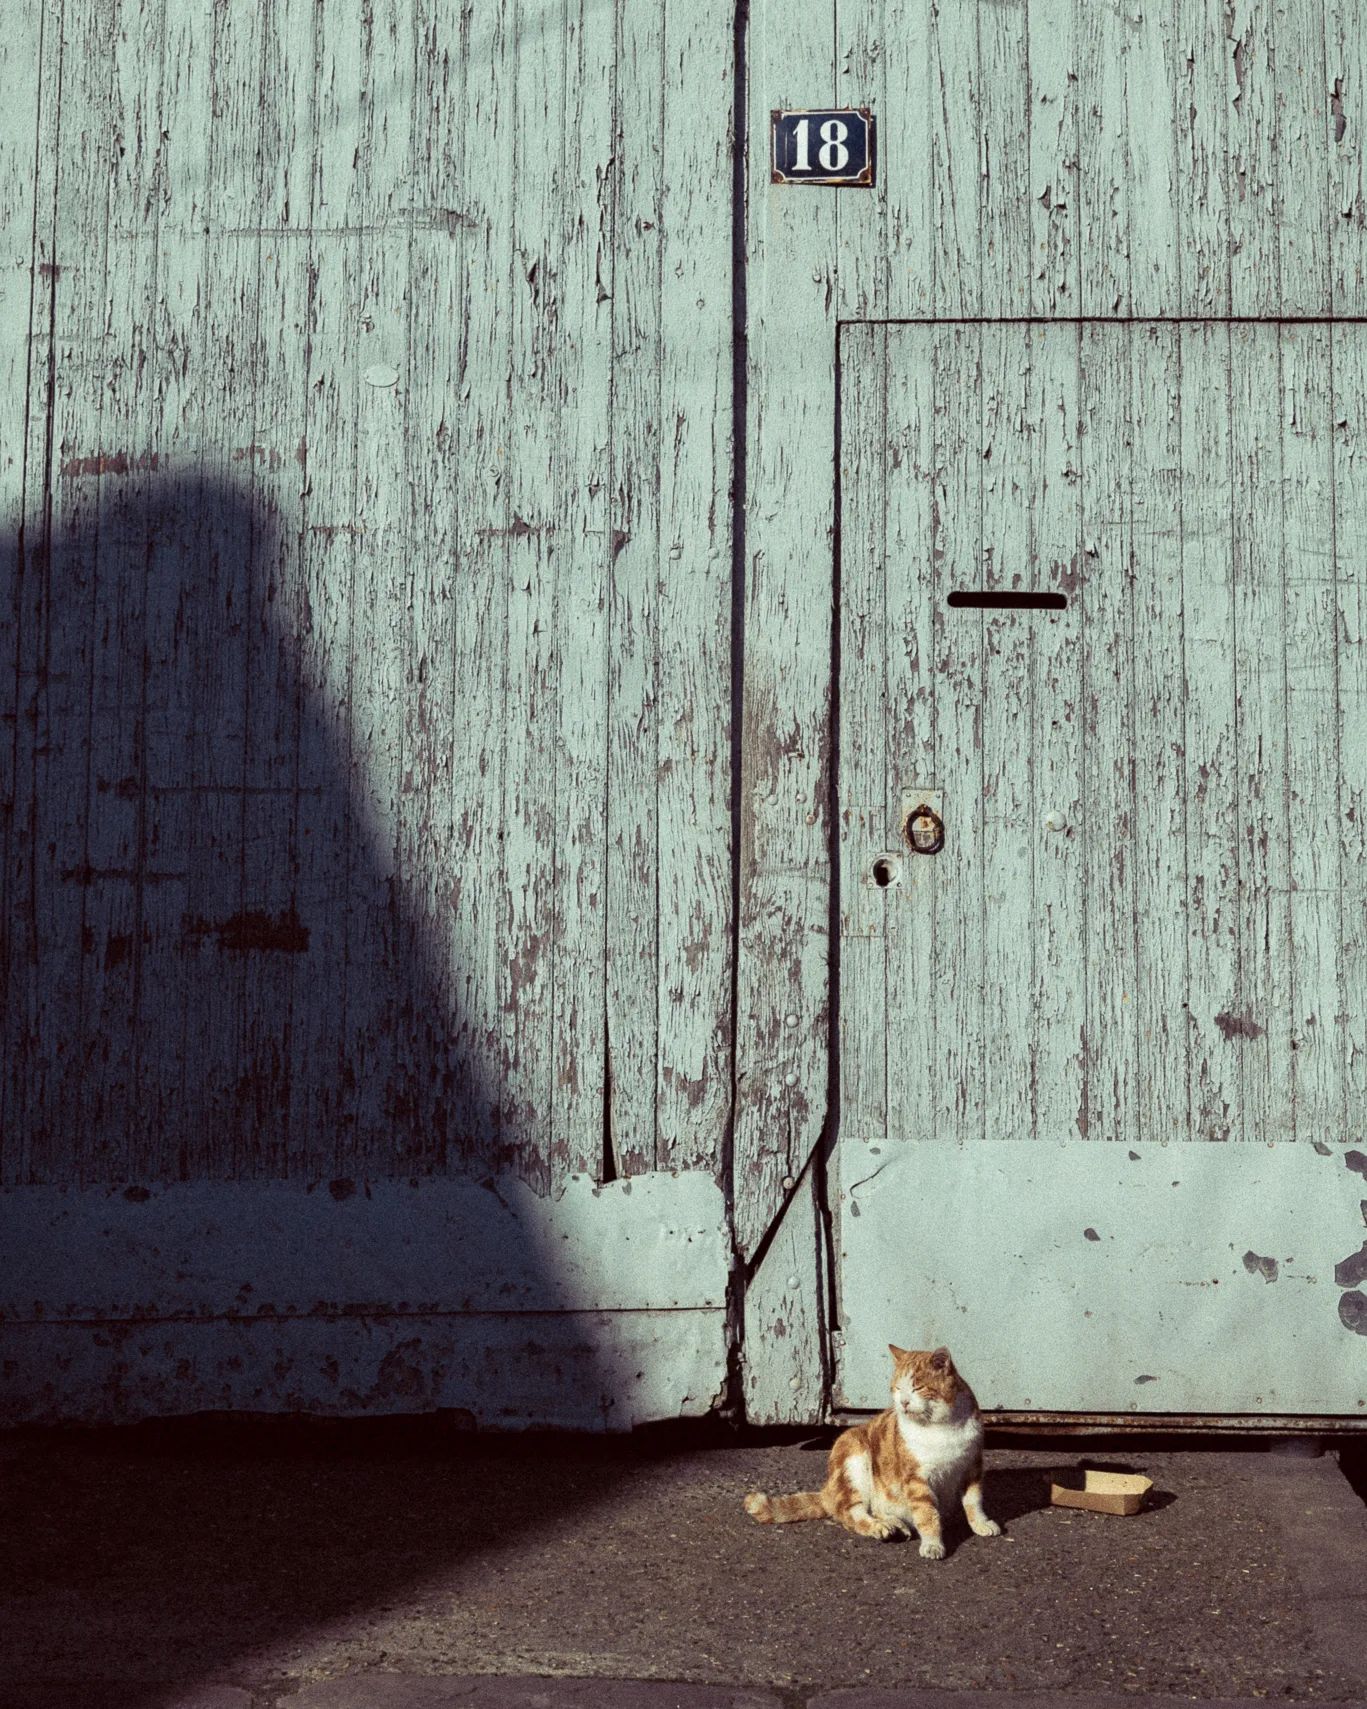 Le chat du 18
.
Lumix S1R x Sigma 45mm
.
#picoftheday #catlover #catstagram #chat #urbex #village #valdoise #streetphotography #lorisfae #lumixs1r #sigma45mmf28contemporary #adobe #urbanphotography #explore_iledefrance #kitten #photoderue #reportage #monsieur615 #shadowhunters #chasethelight #shadows #photographevaldoise